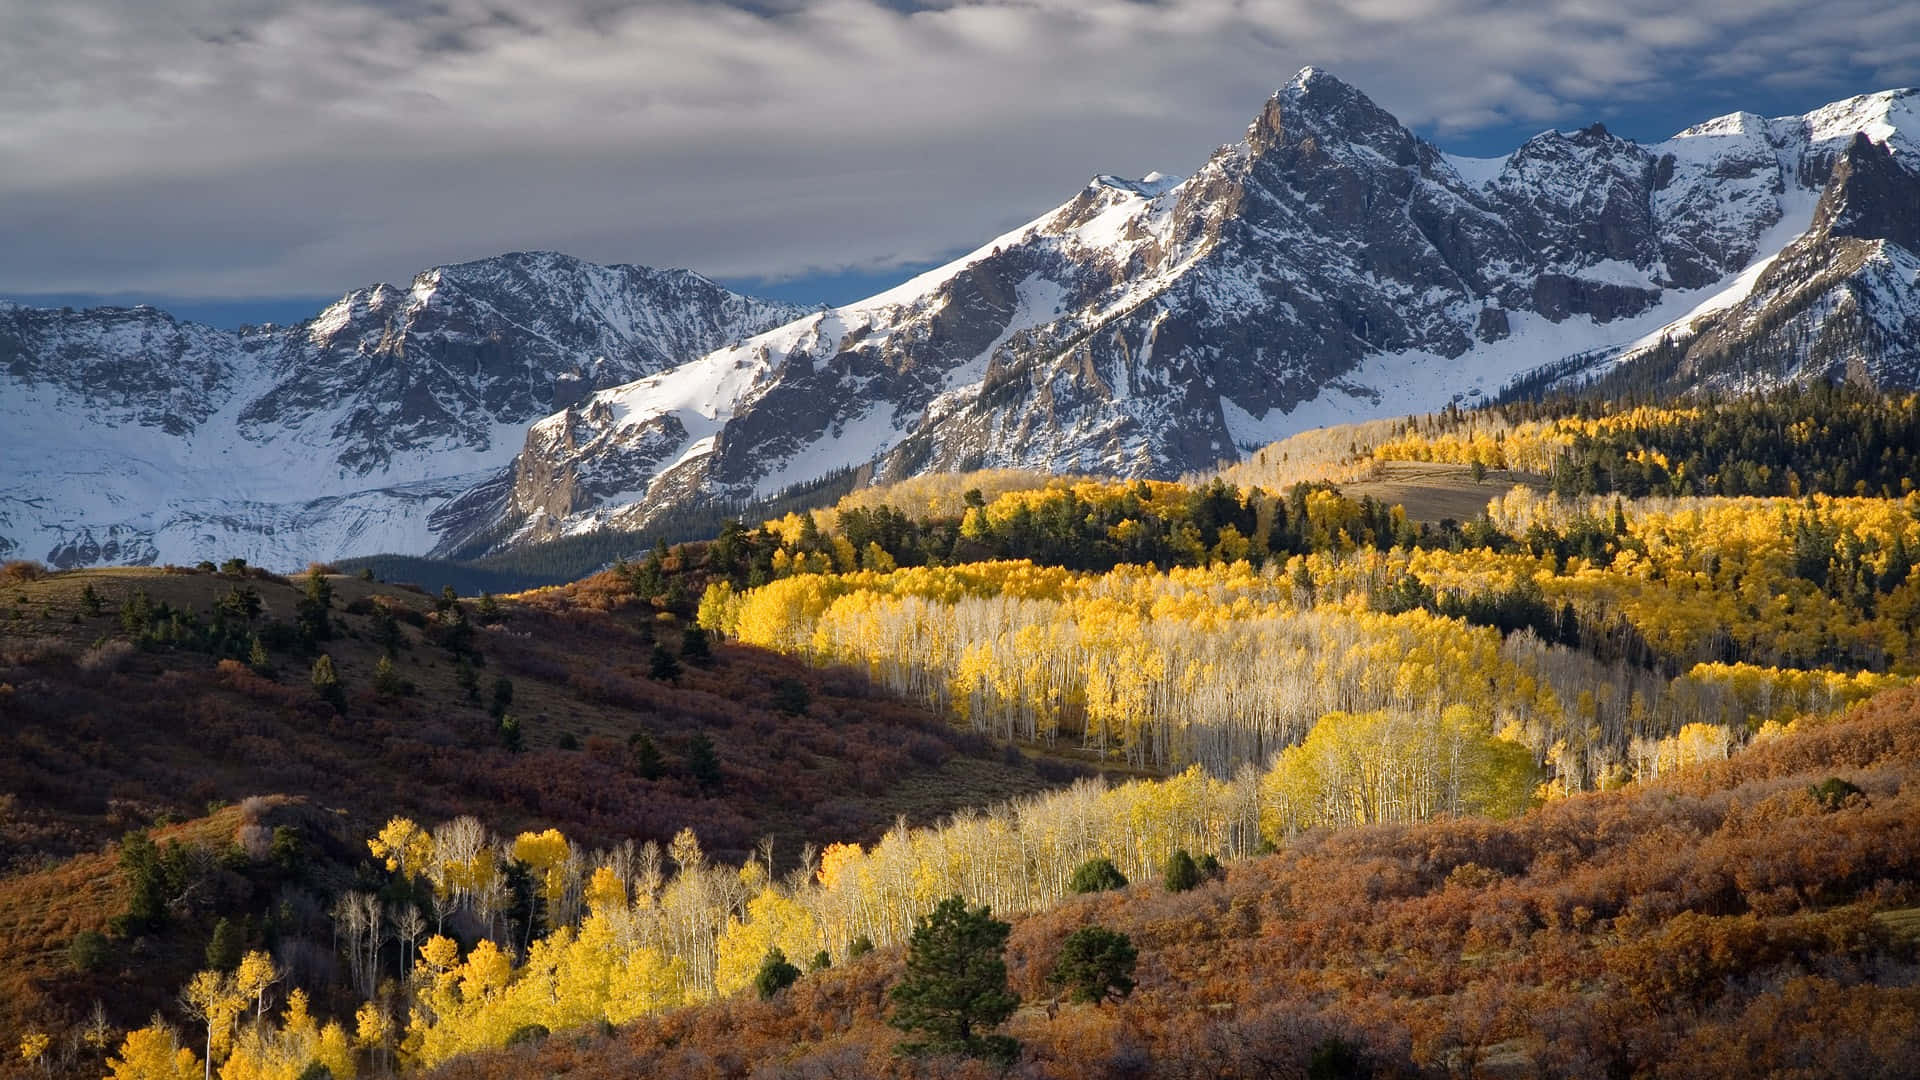 Breathtaking Scenery of Colorado's Majestic Mountain Landscape